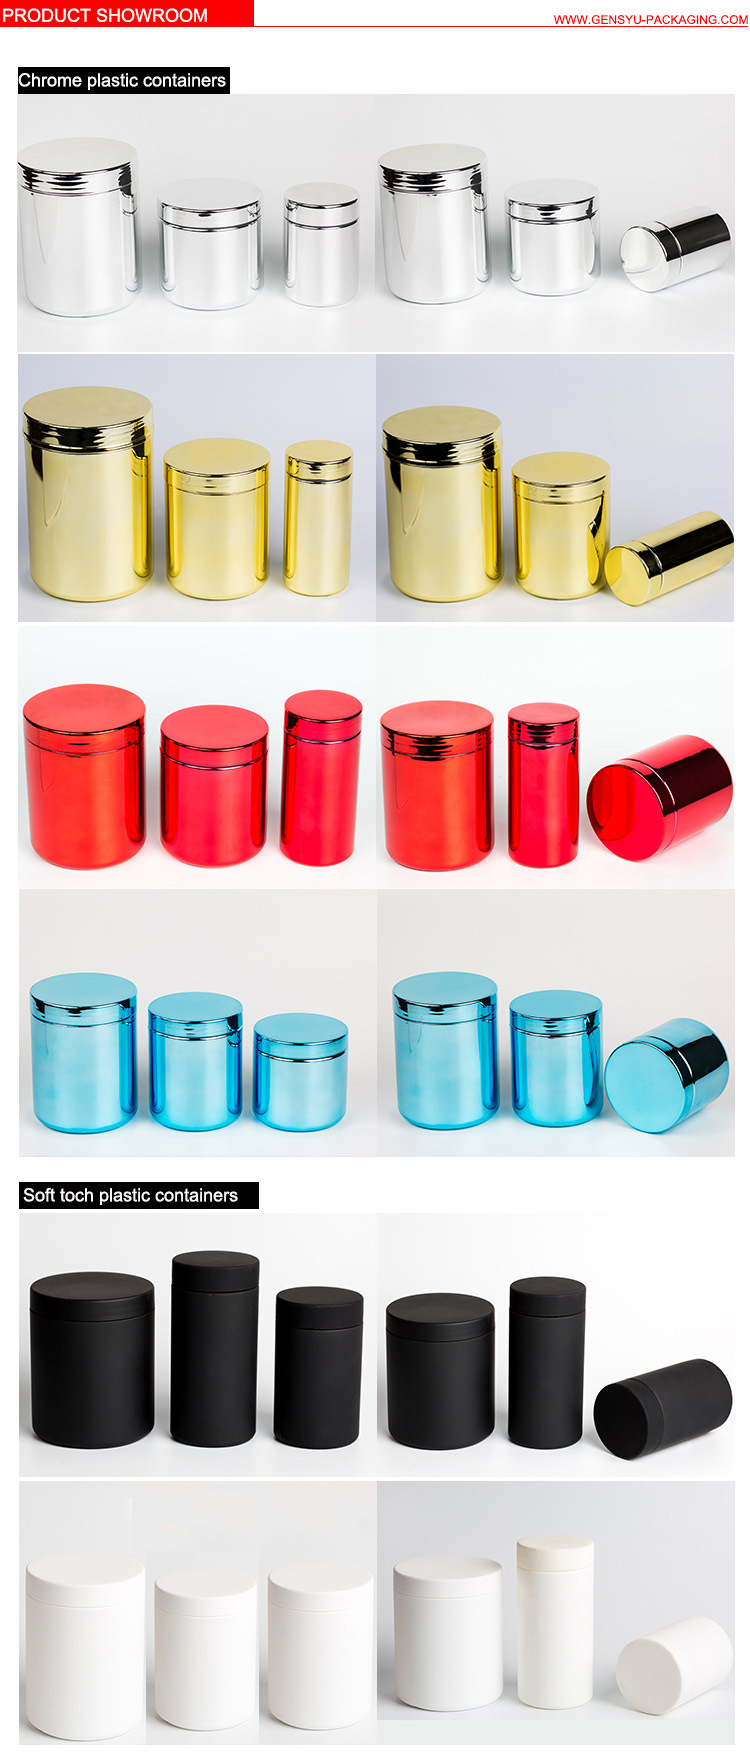 Hot Selling HDPE Color Chromed Plastic Bottles for Supplements